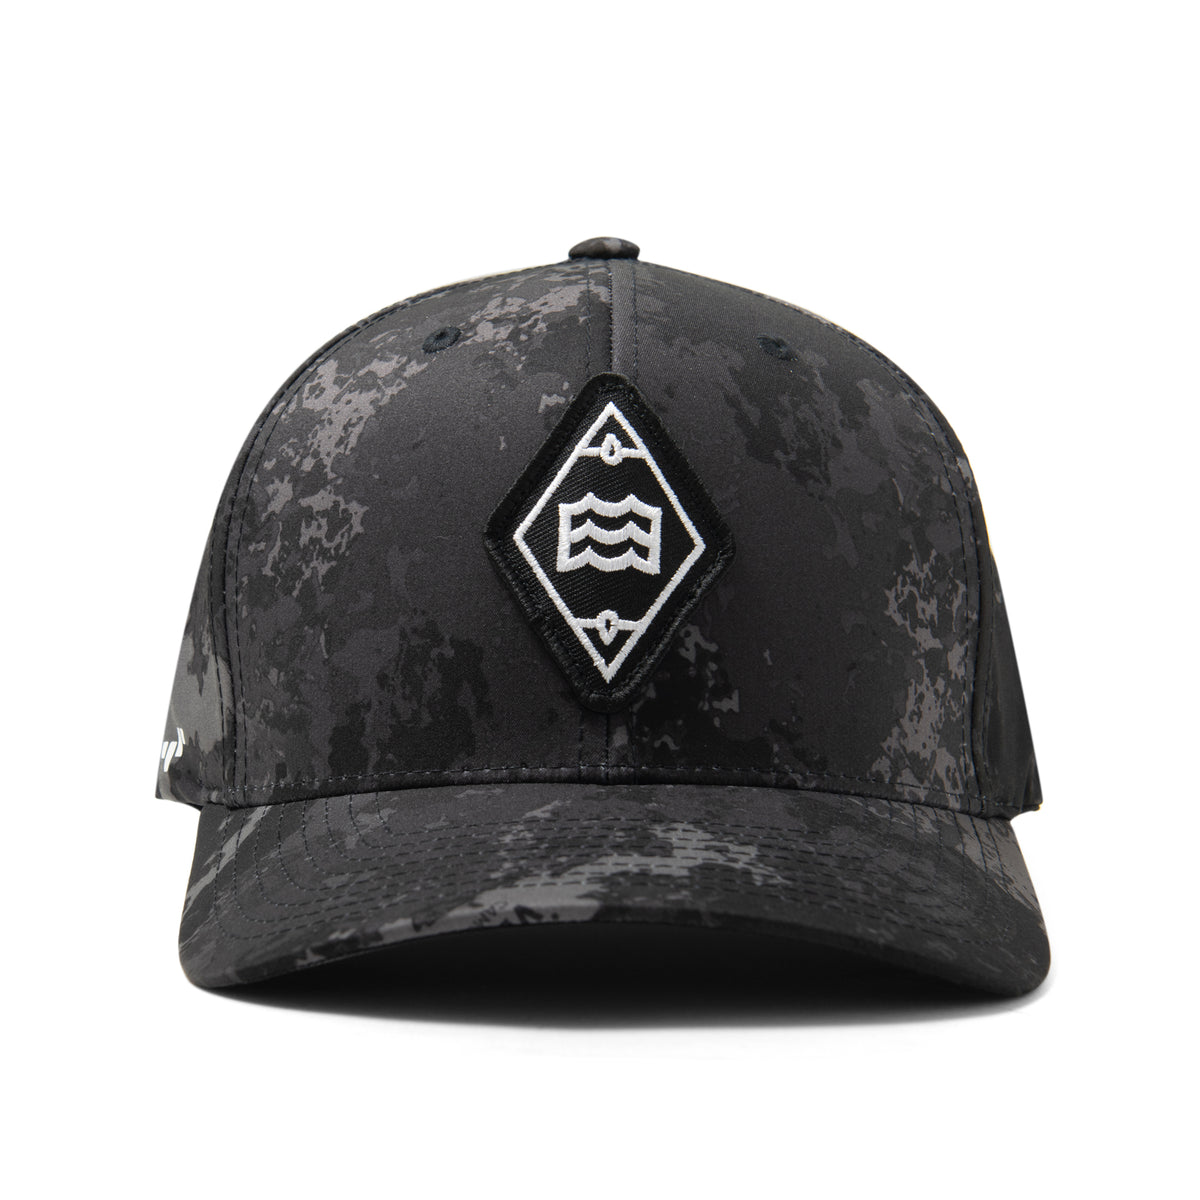 Vision Patch Camo) – FlexFit Hat Lateral Diamond (Black Logo